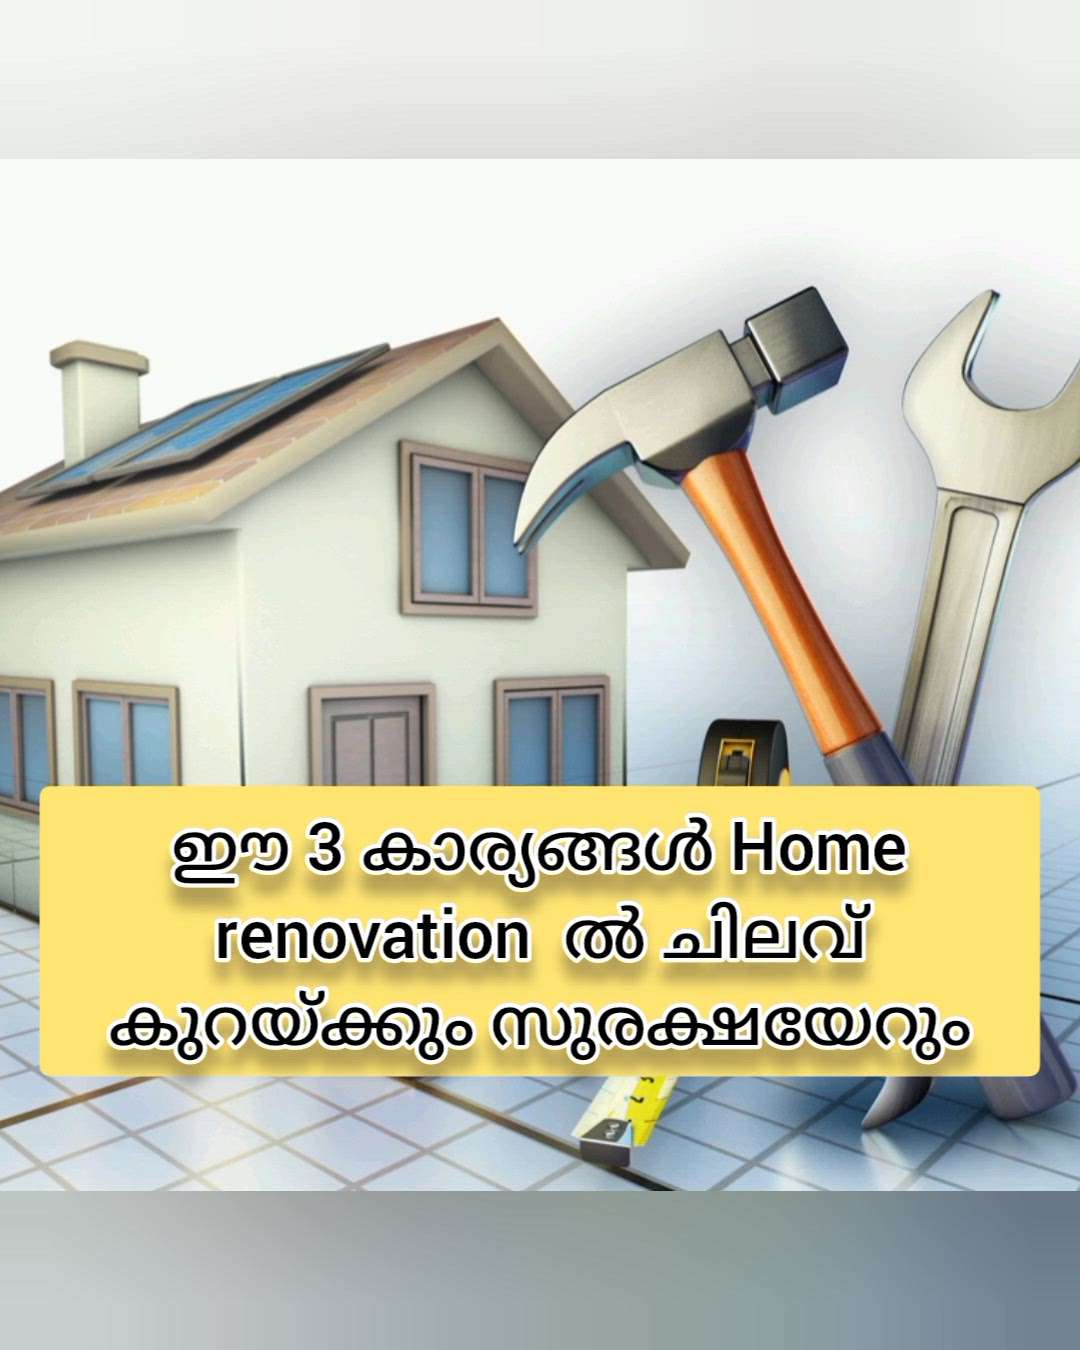 #creatorsofkolo  #kasaragod  #homerenovation #renovation  #beforeandafter  #home  #design  #homerenovationideas  #wpc  #Steeldoor  #SteelWindows  #Water_Proofing